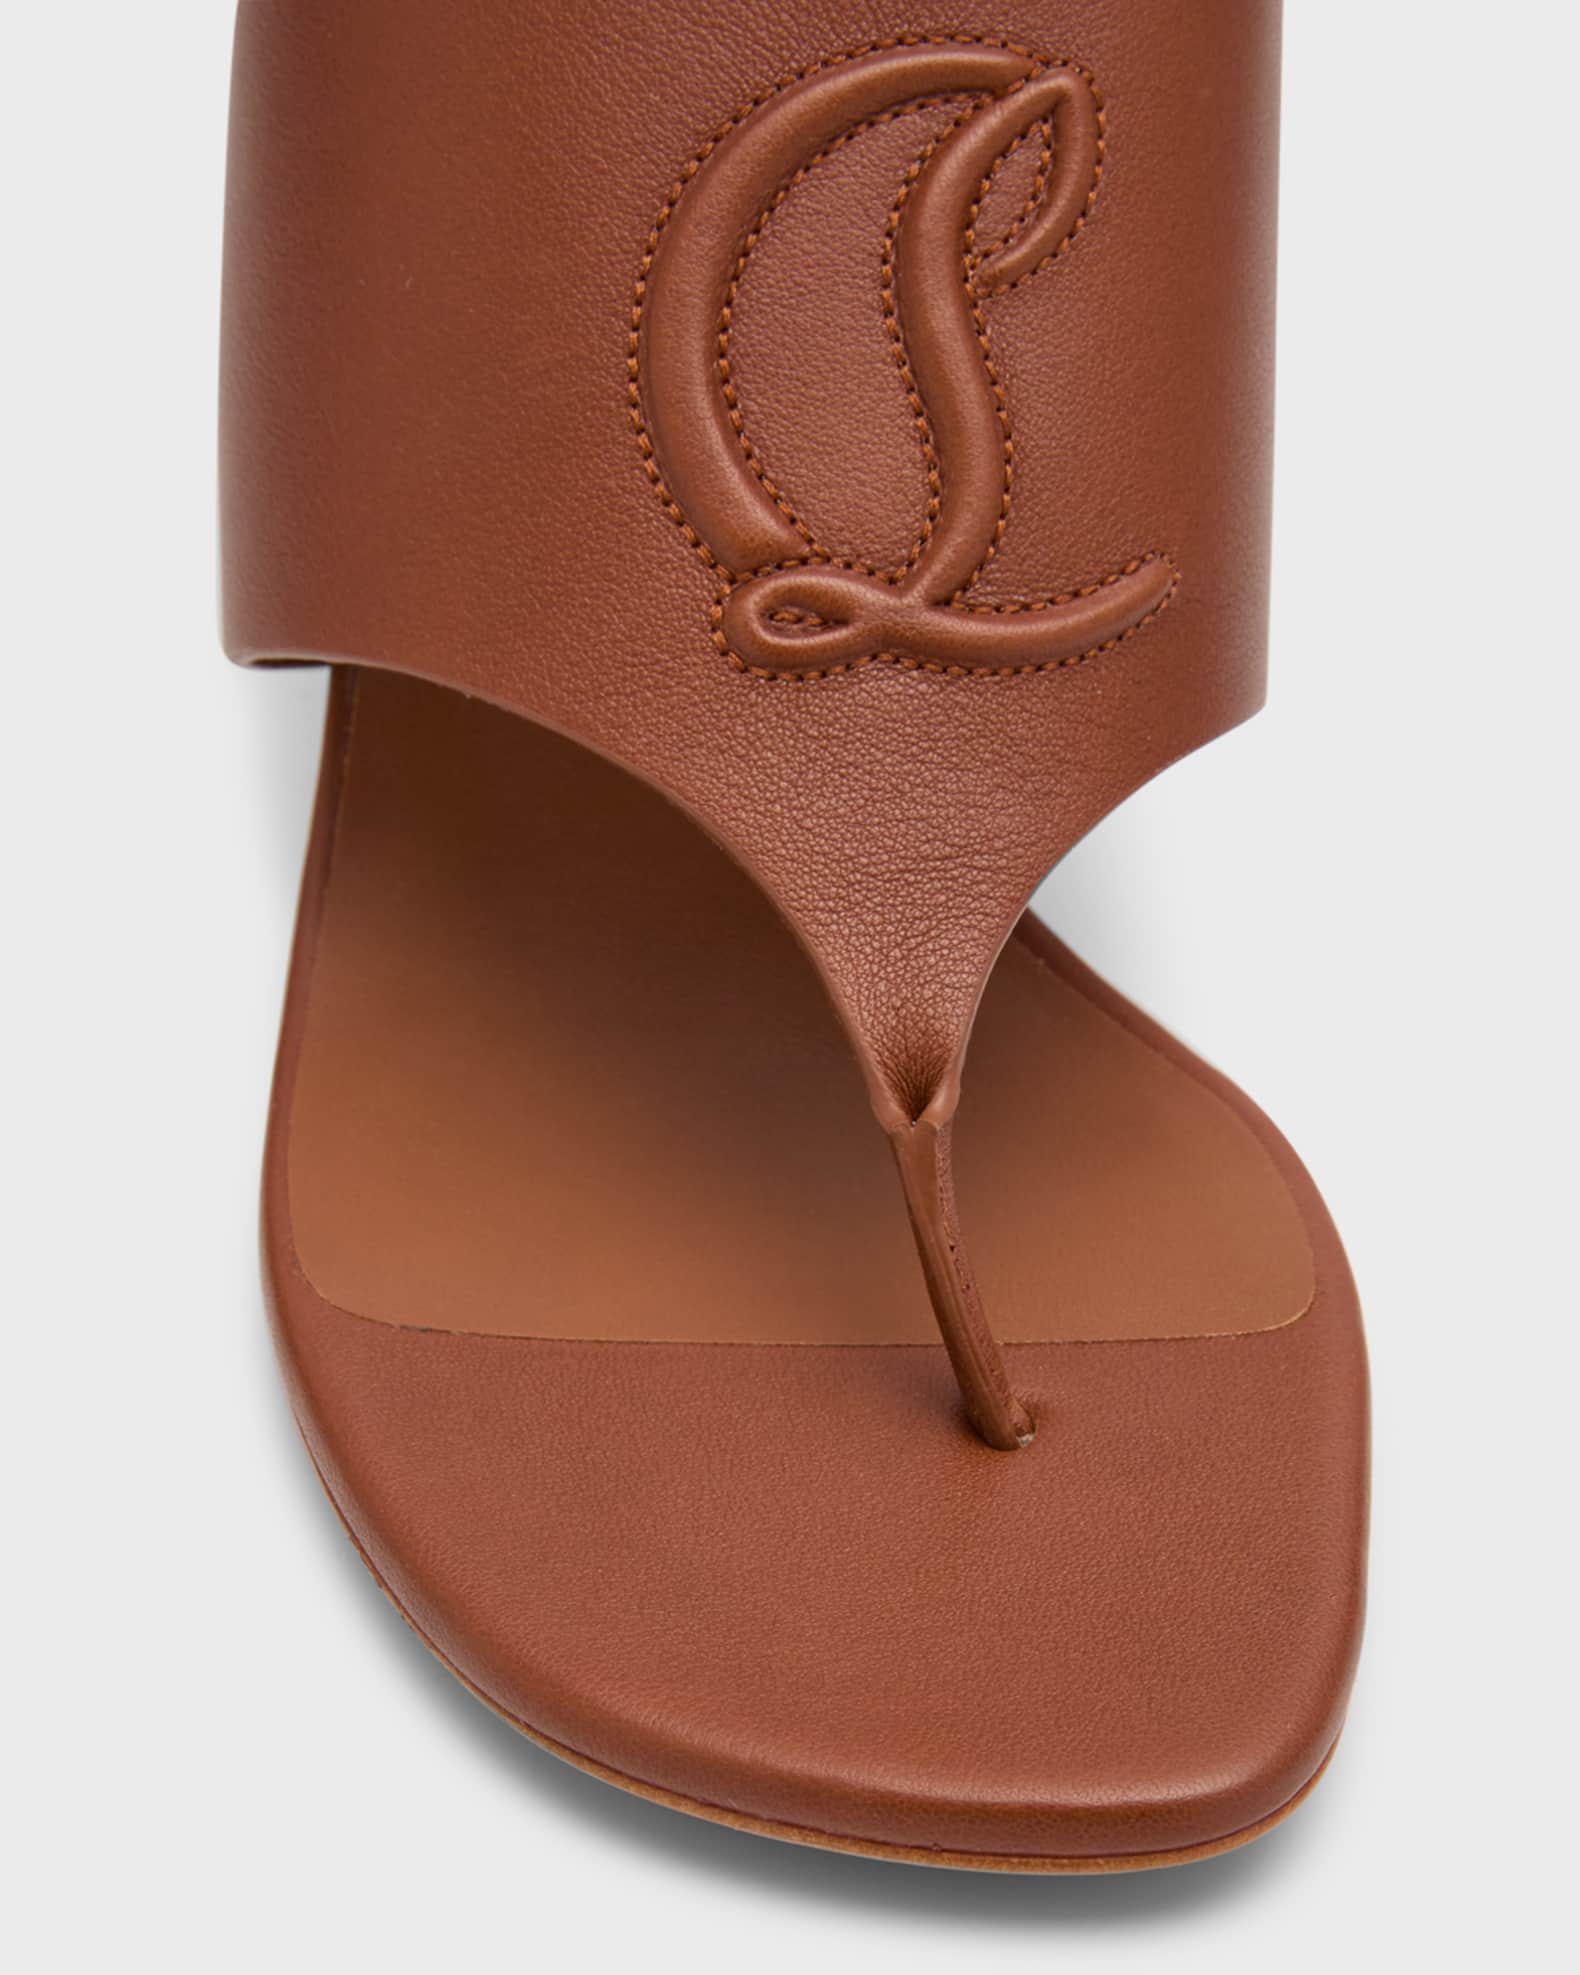 Shop Christian Louboutin Suede Plain Logo Sandals by Amery Shop